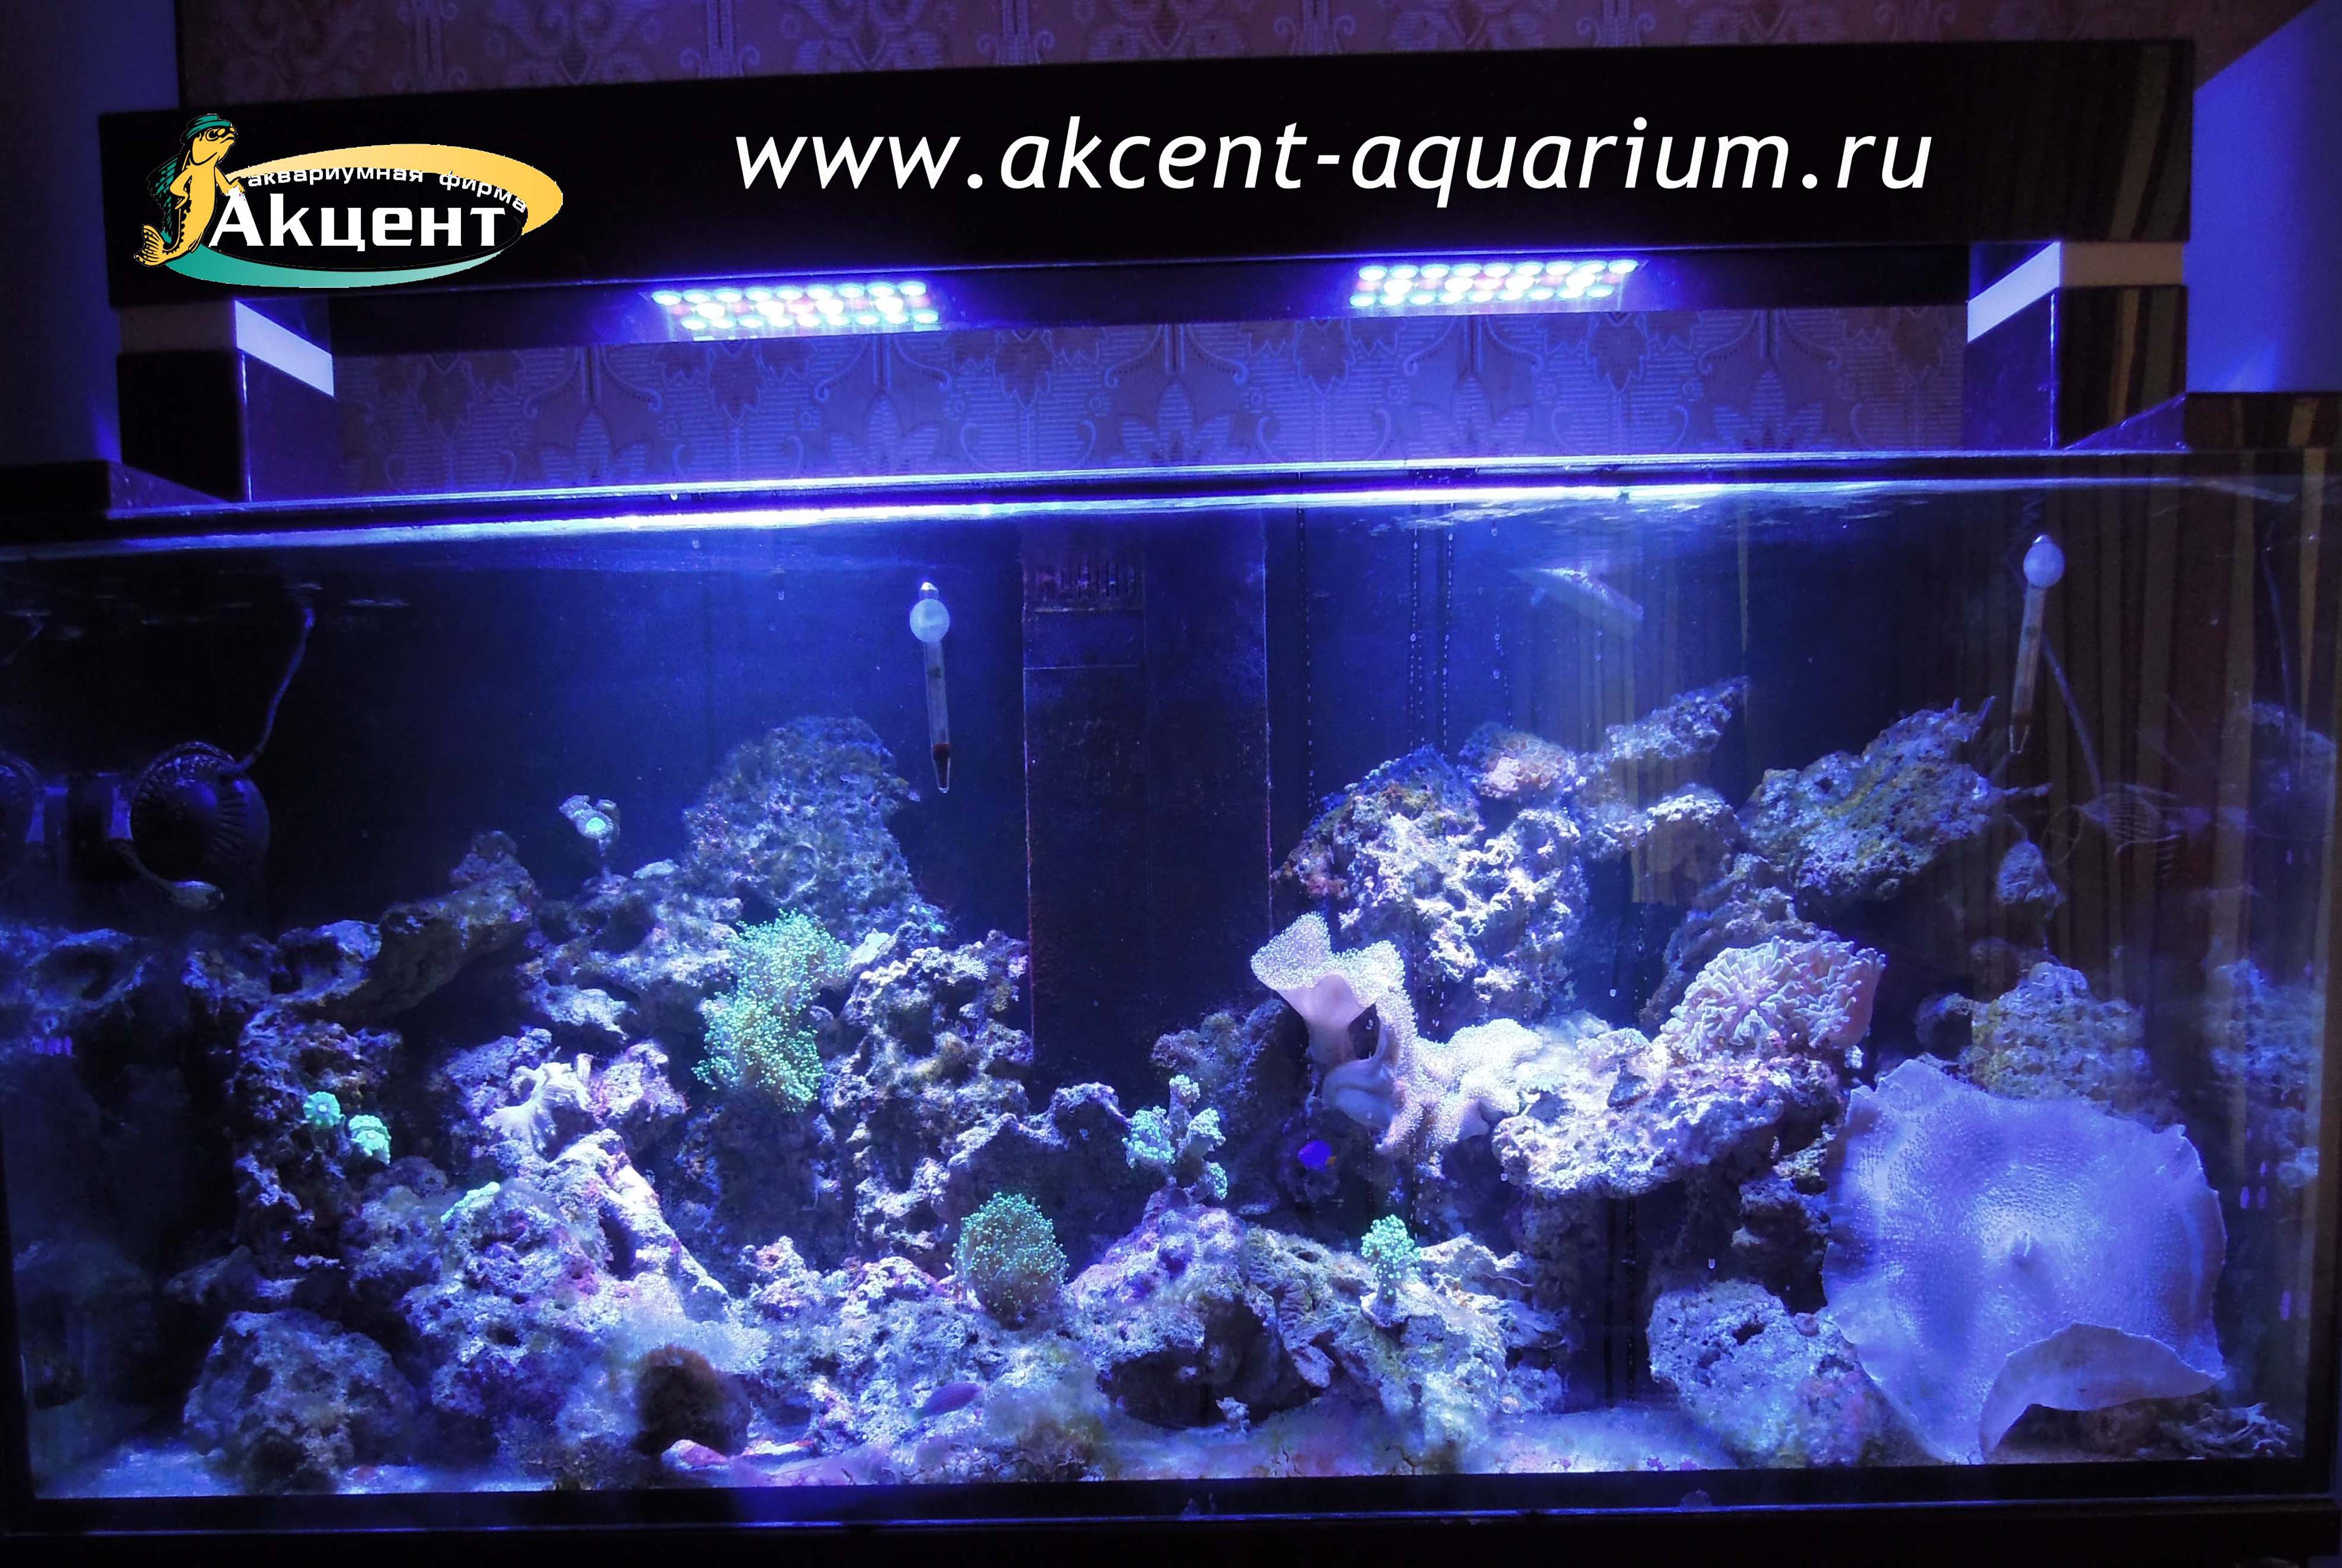 Акцент-аквариум, морской рифофый аквариум 450 литров